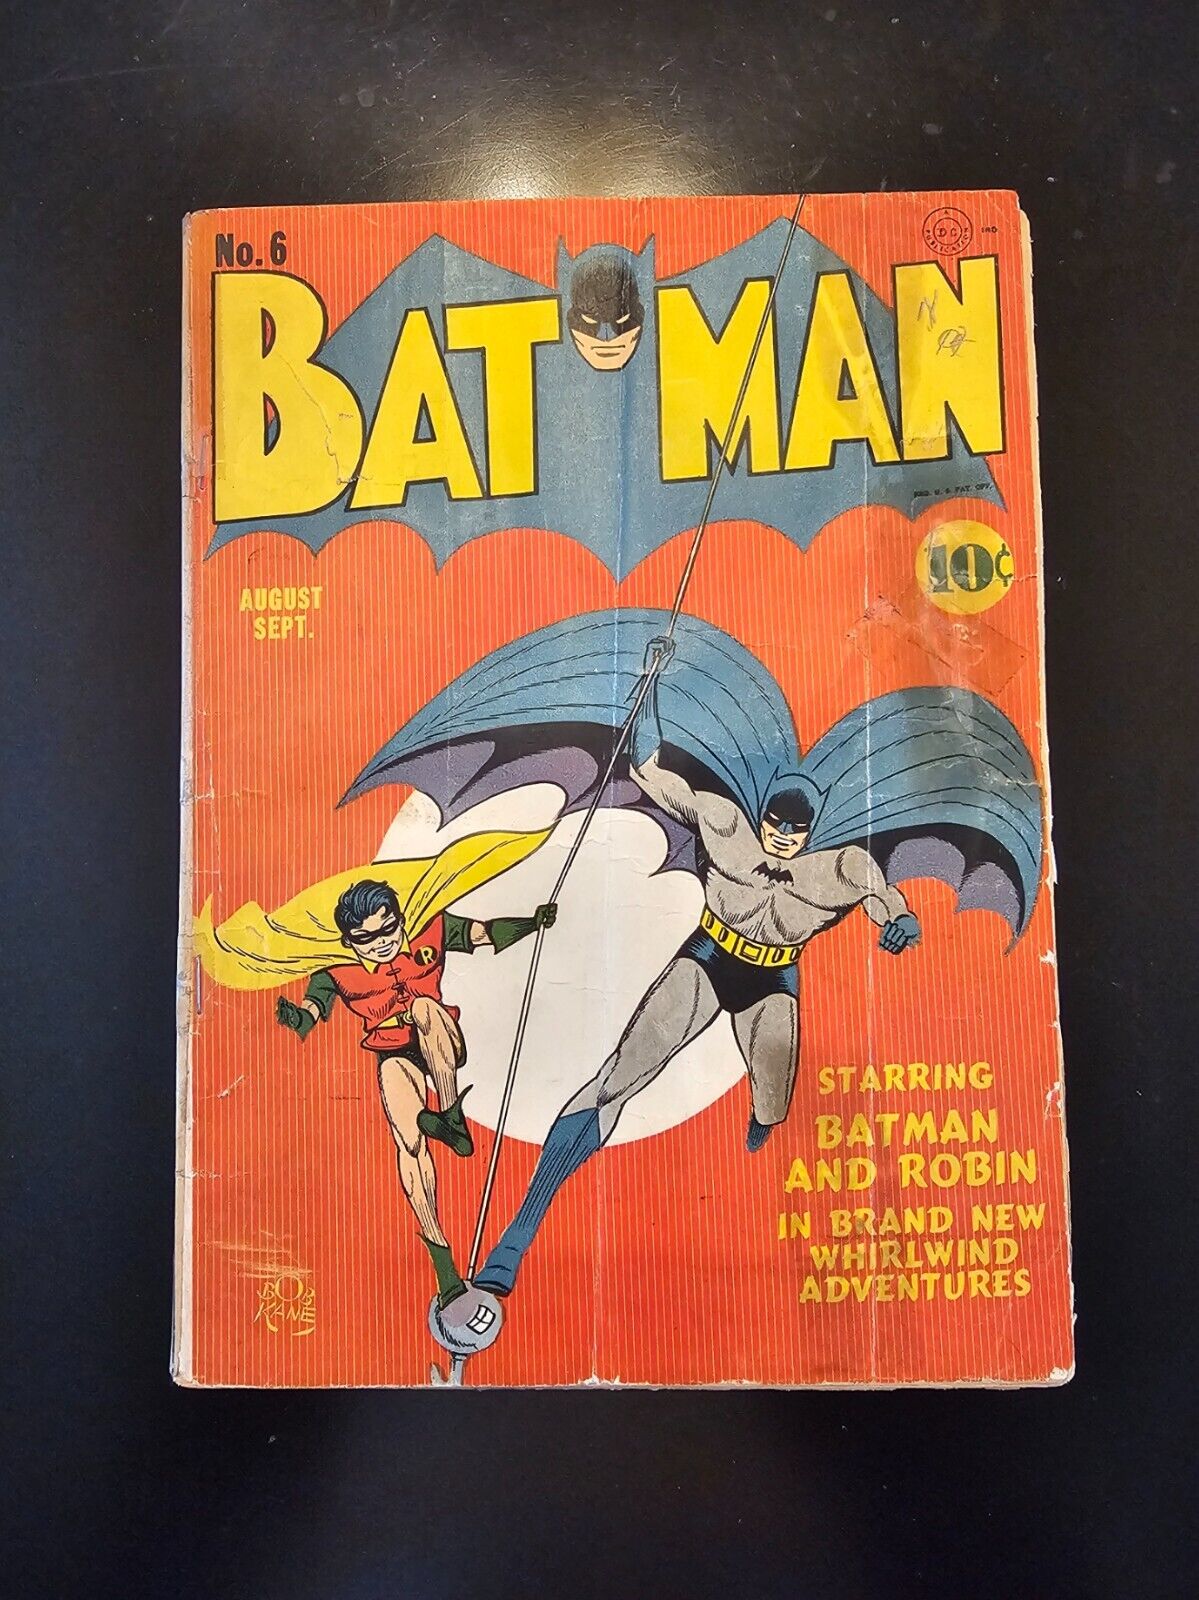 Batman #6 1941 Bob Kane Golden Age Batman and Robin Classic Cover